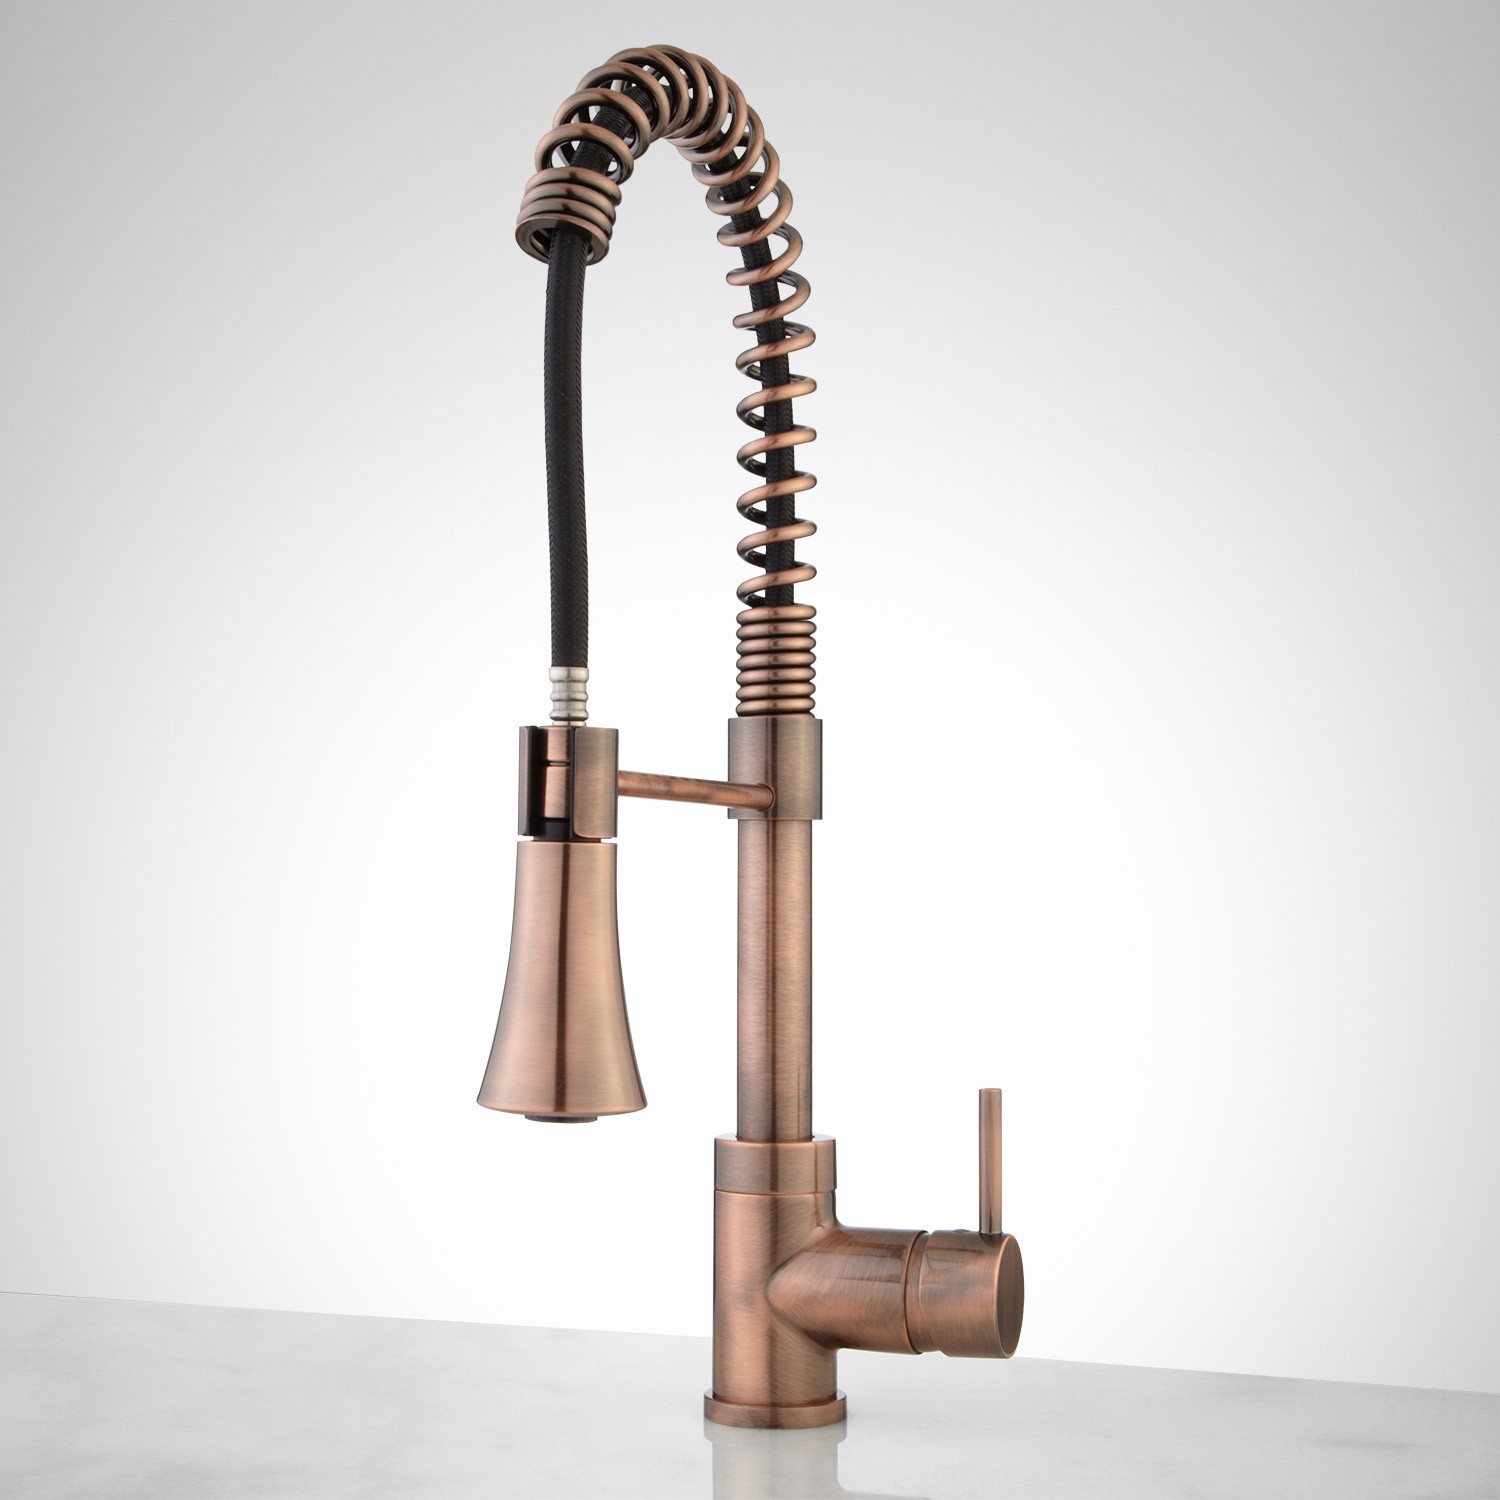 steyn kitchen faucet with spring spout - antique copper WJVVSLJ